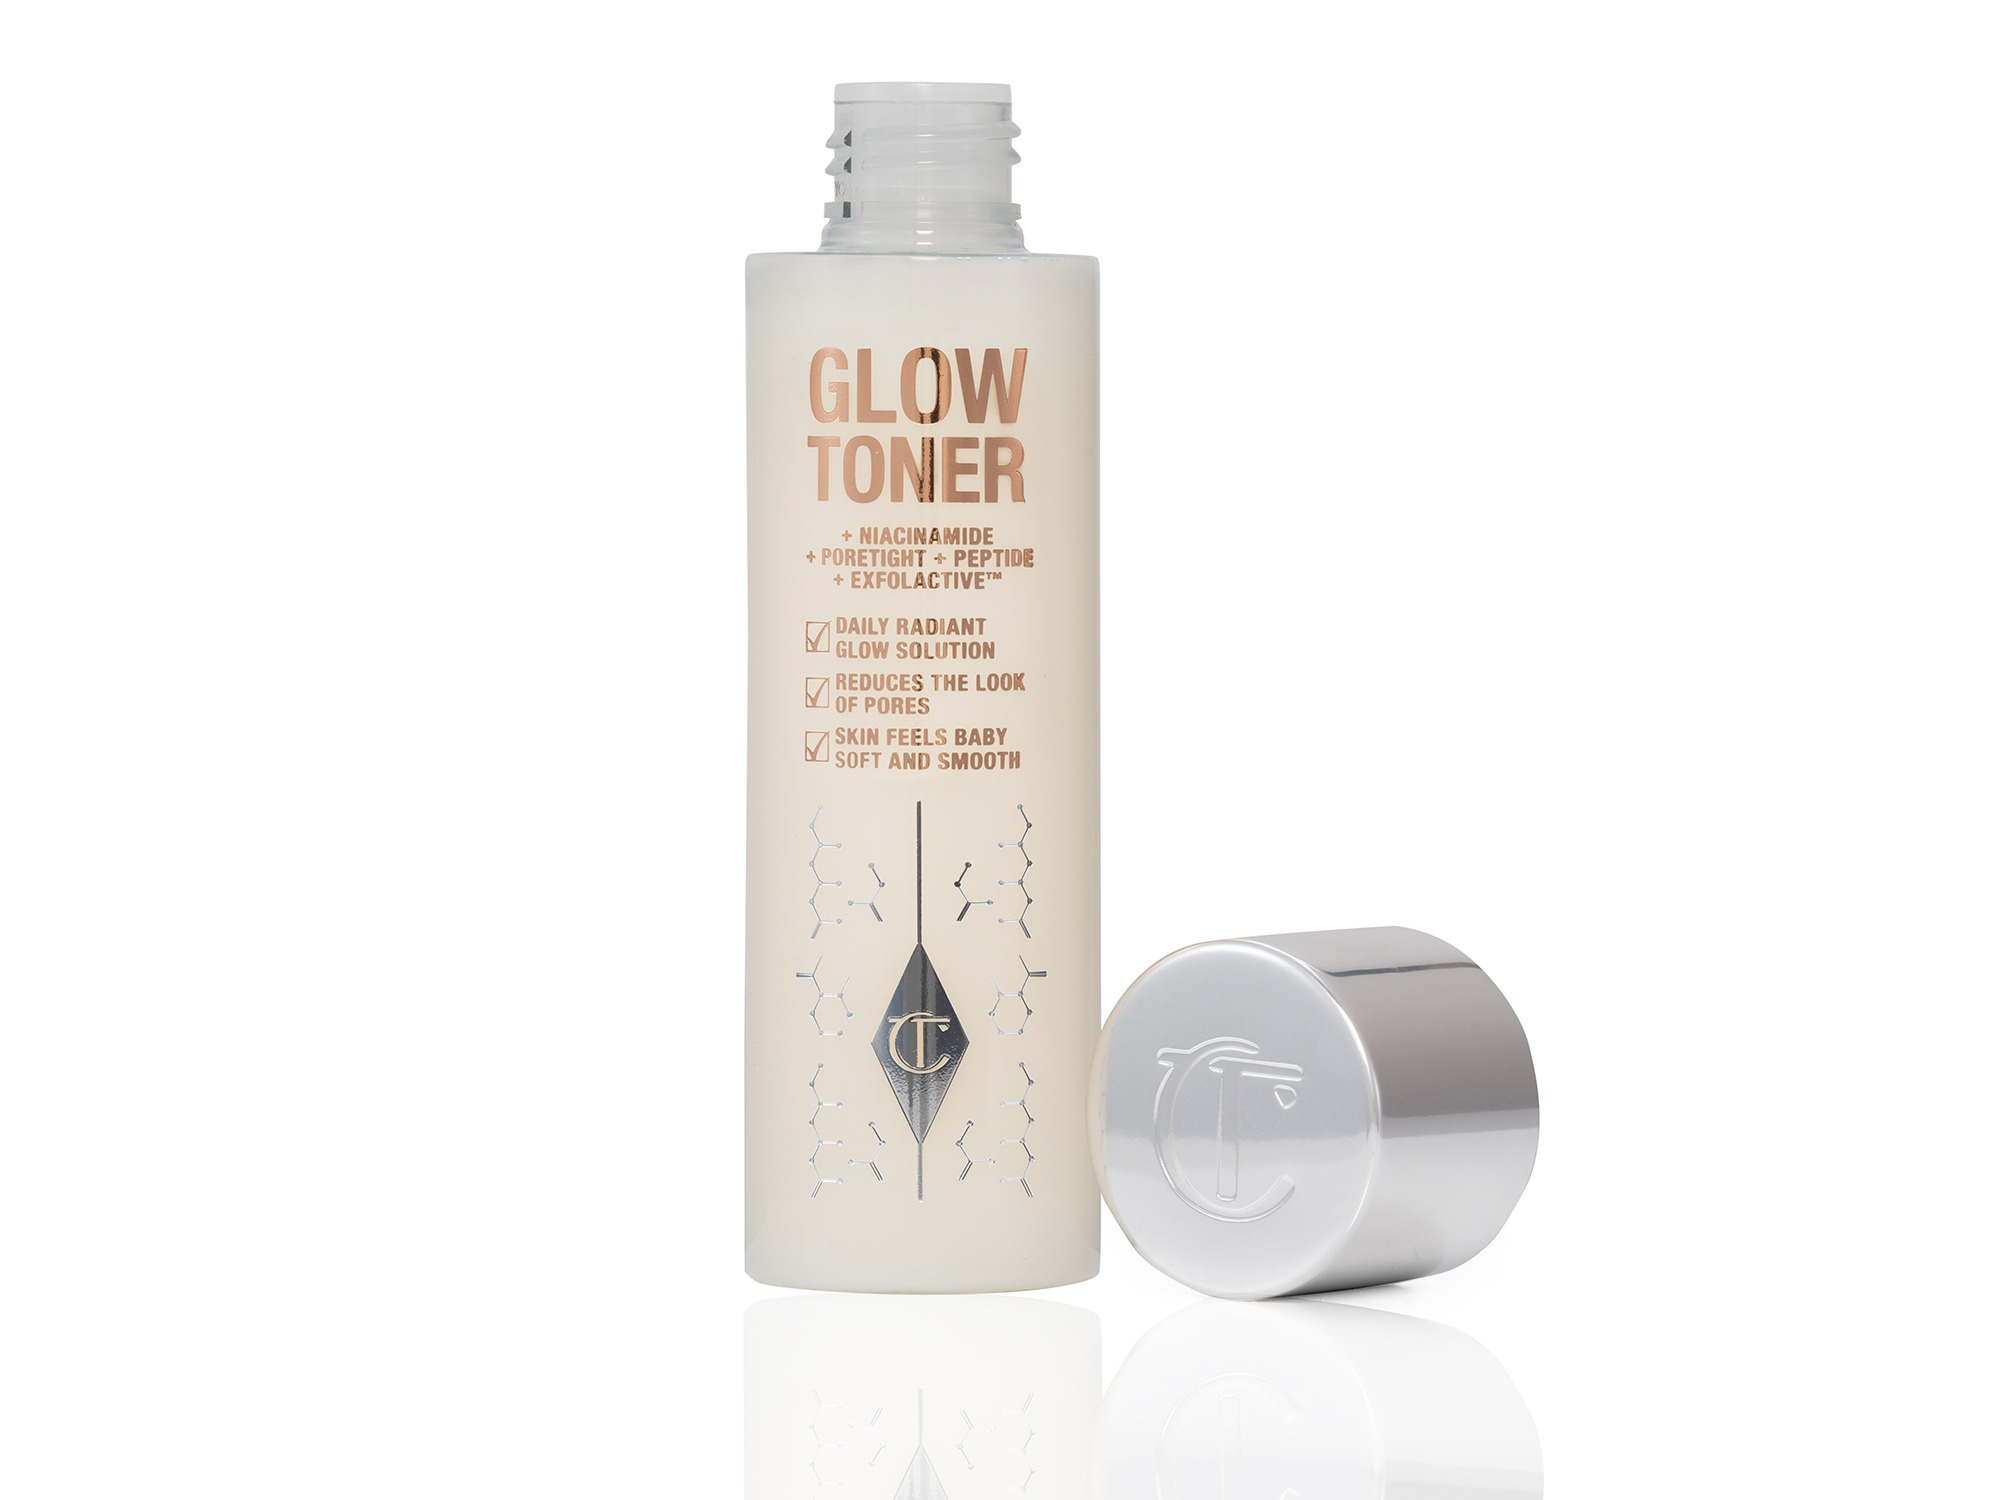 Glow Toner 4x3 packshot